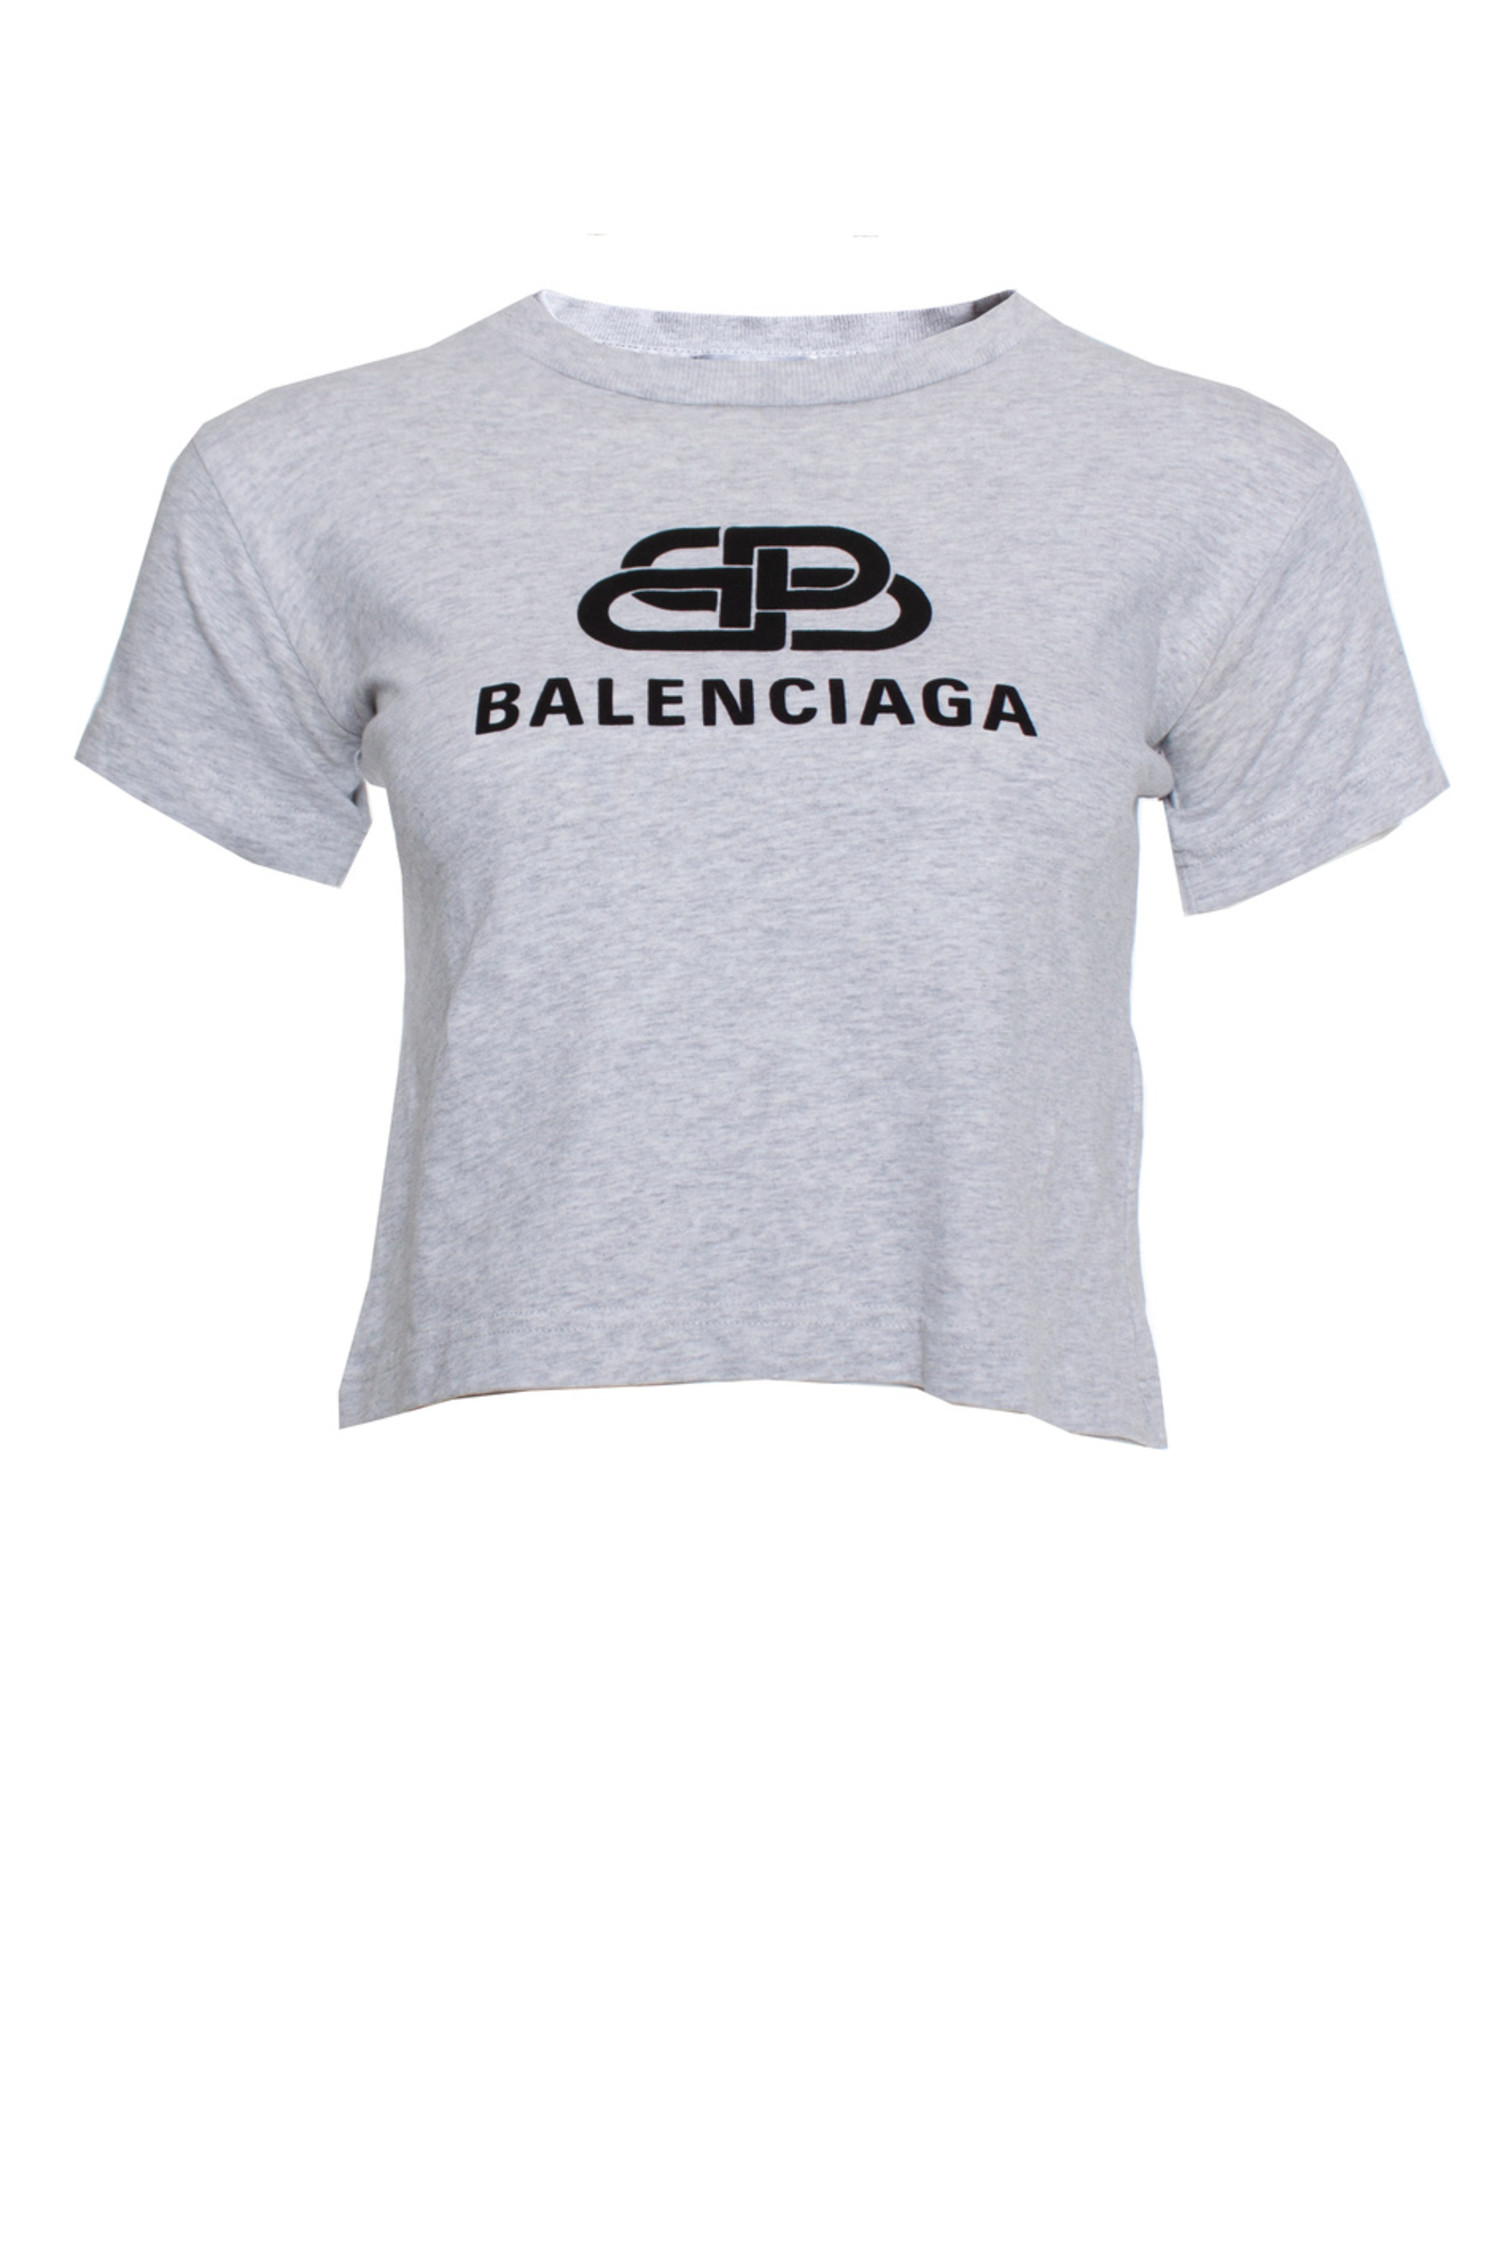 Op grote schaal innovatie Kenmerkend Balenciaga, grijs BB crop t-shirt - Unique Designer Pieces